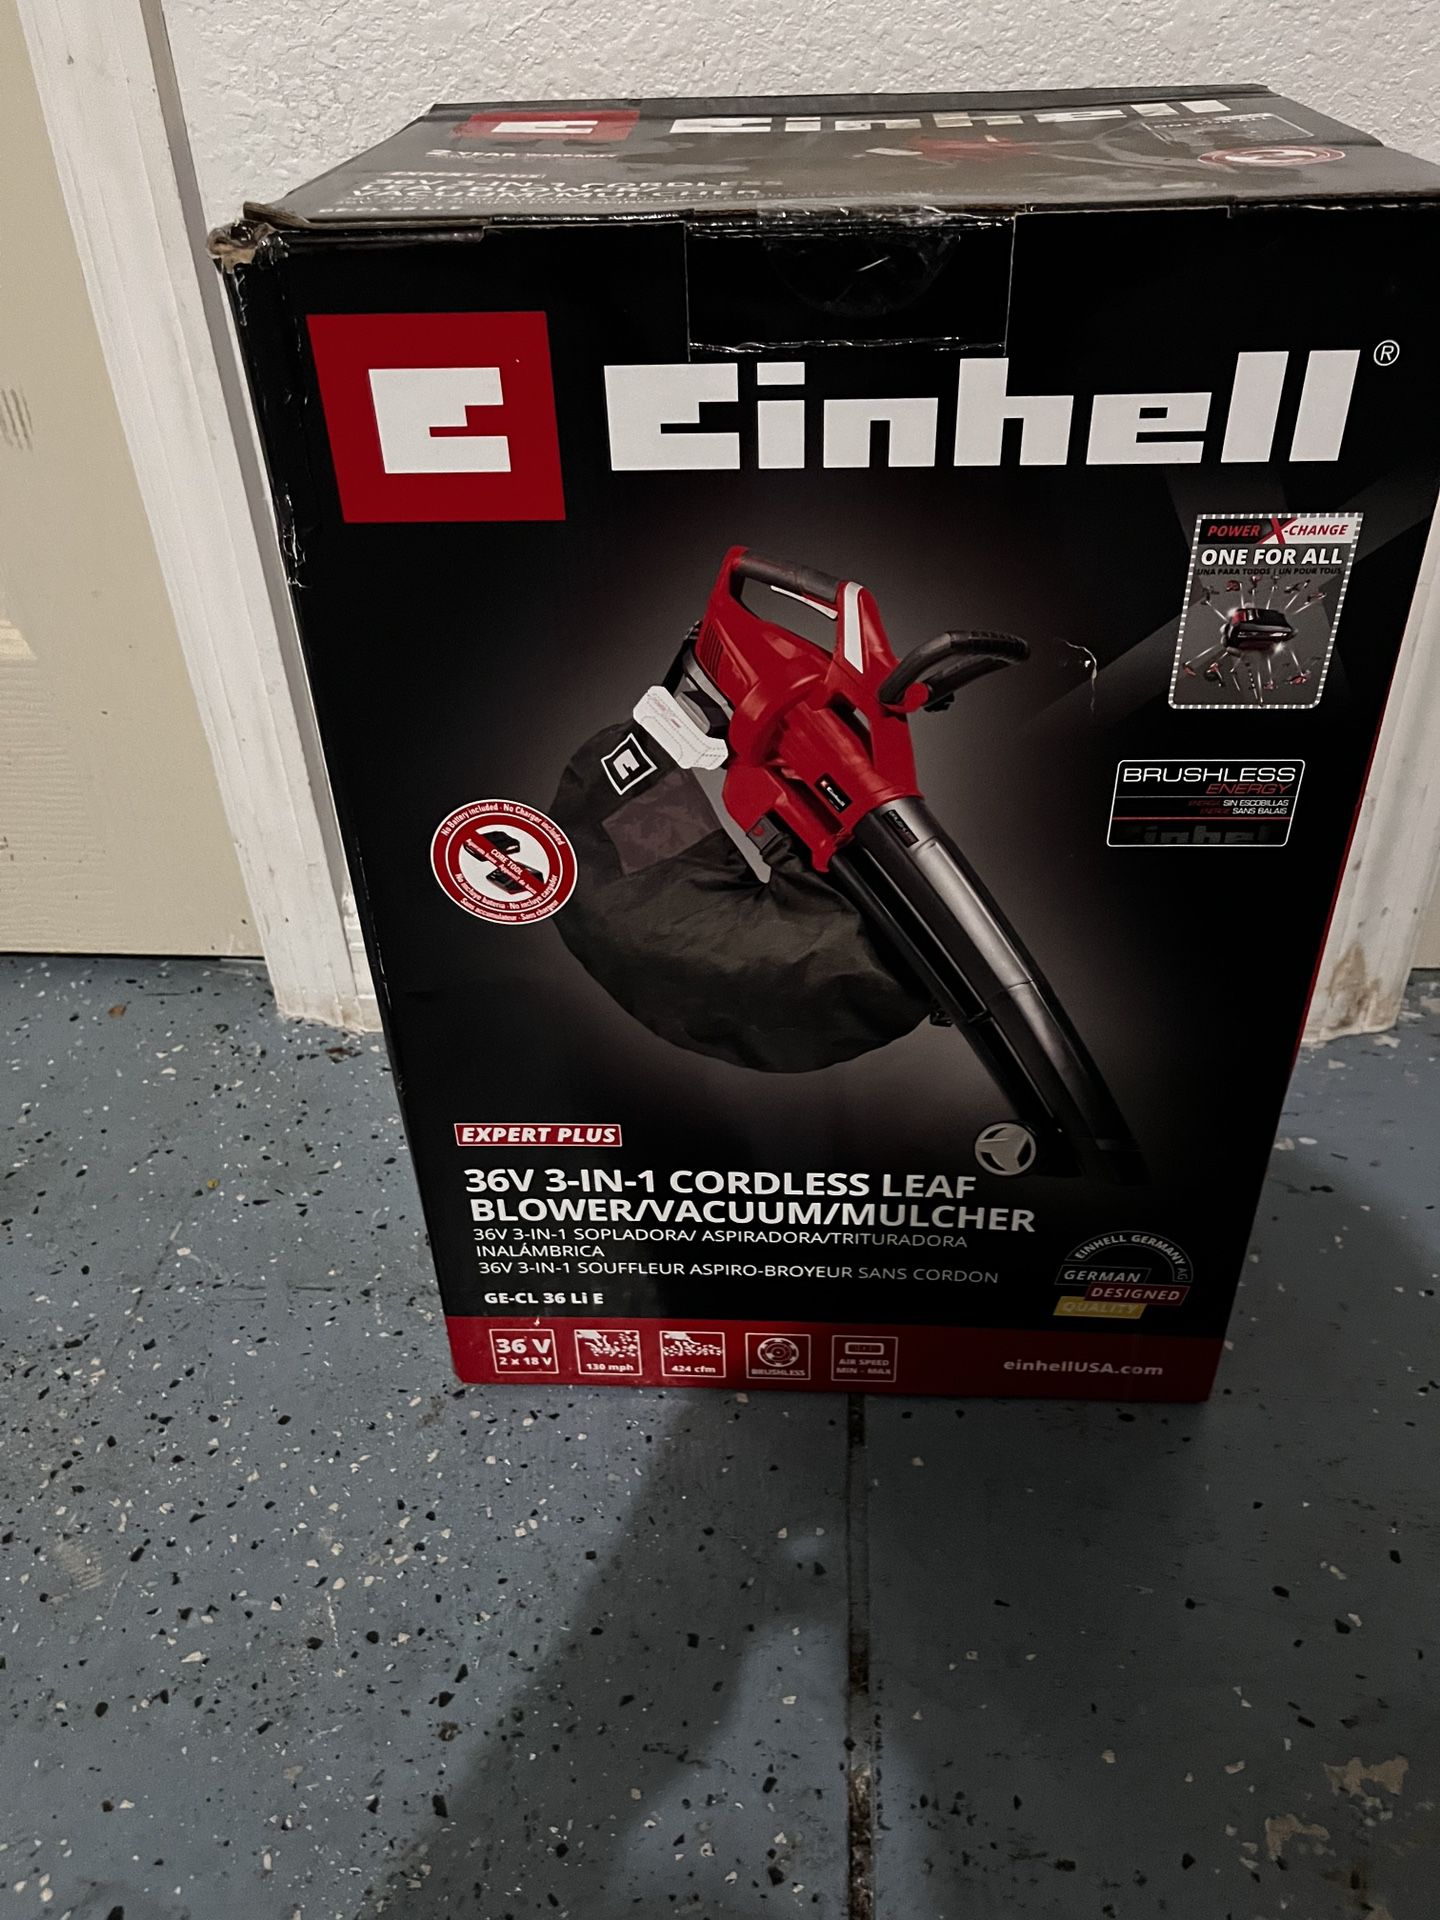 The cordless Einhell GE-CL 36 Li E - Leaf Blower Vac